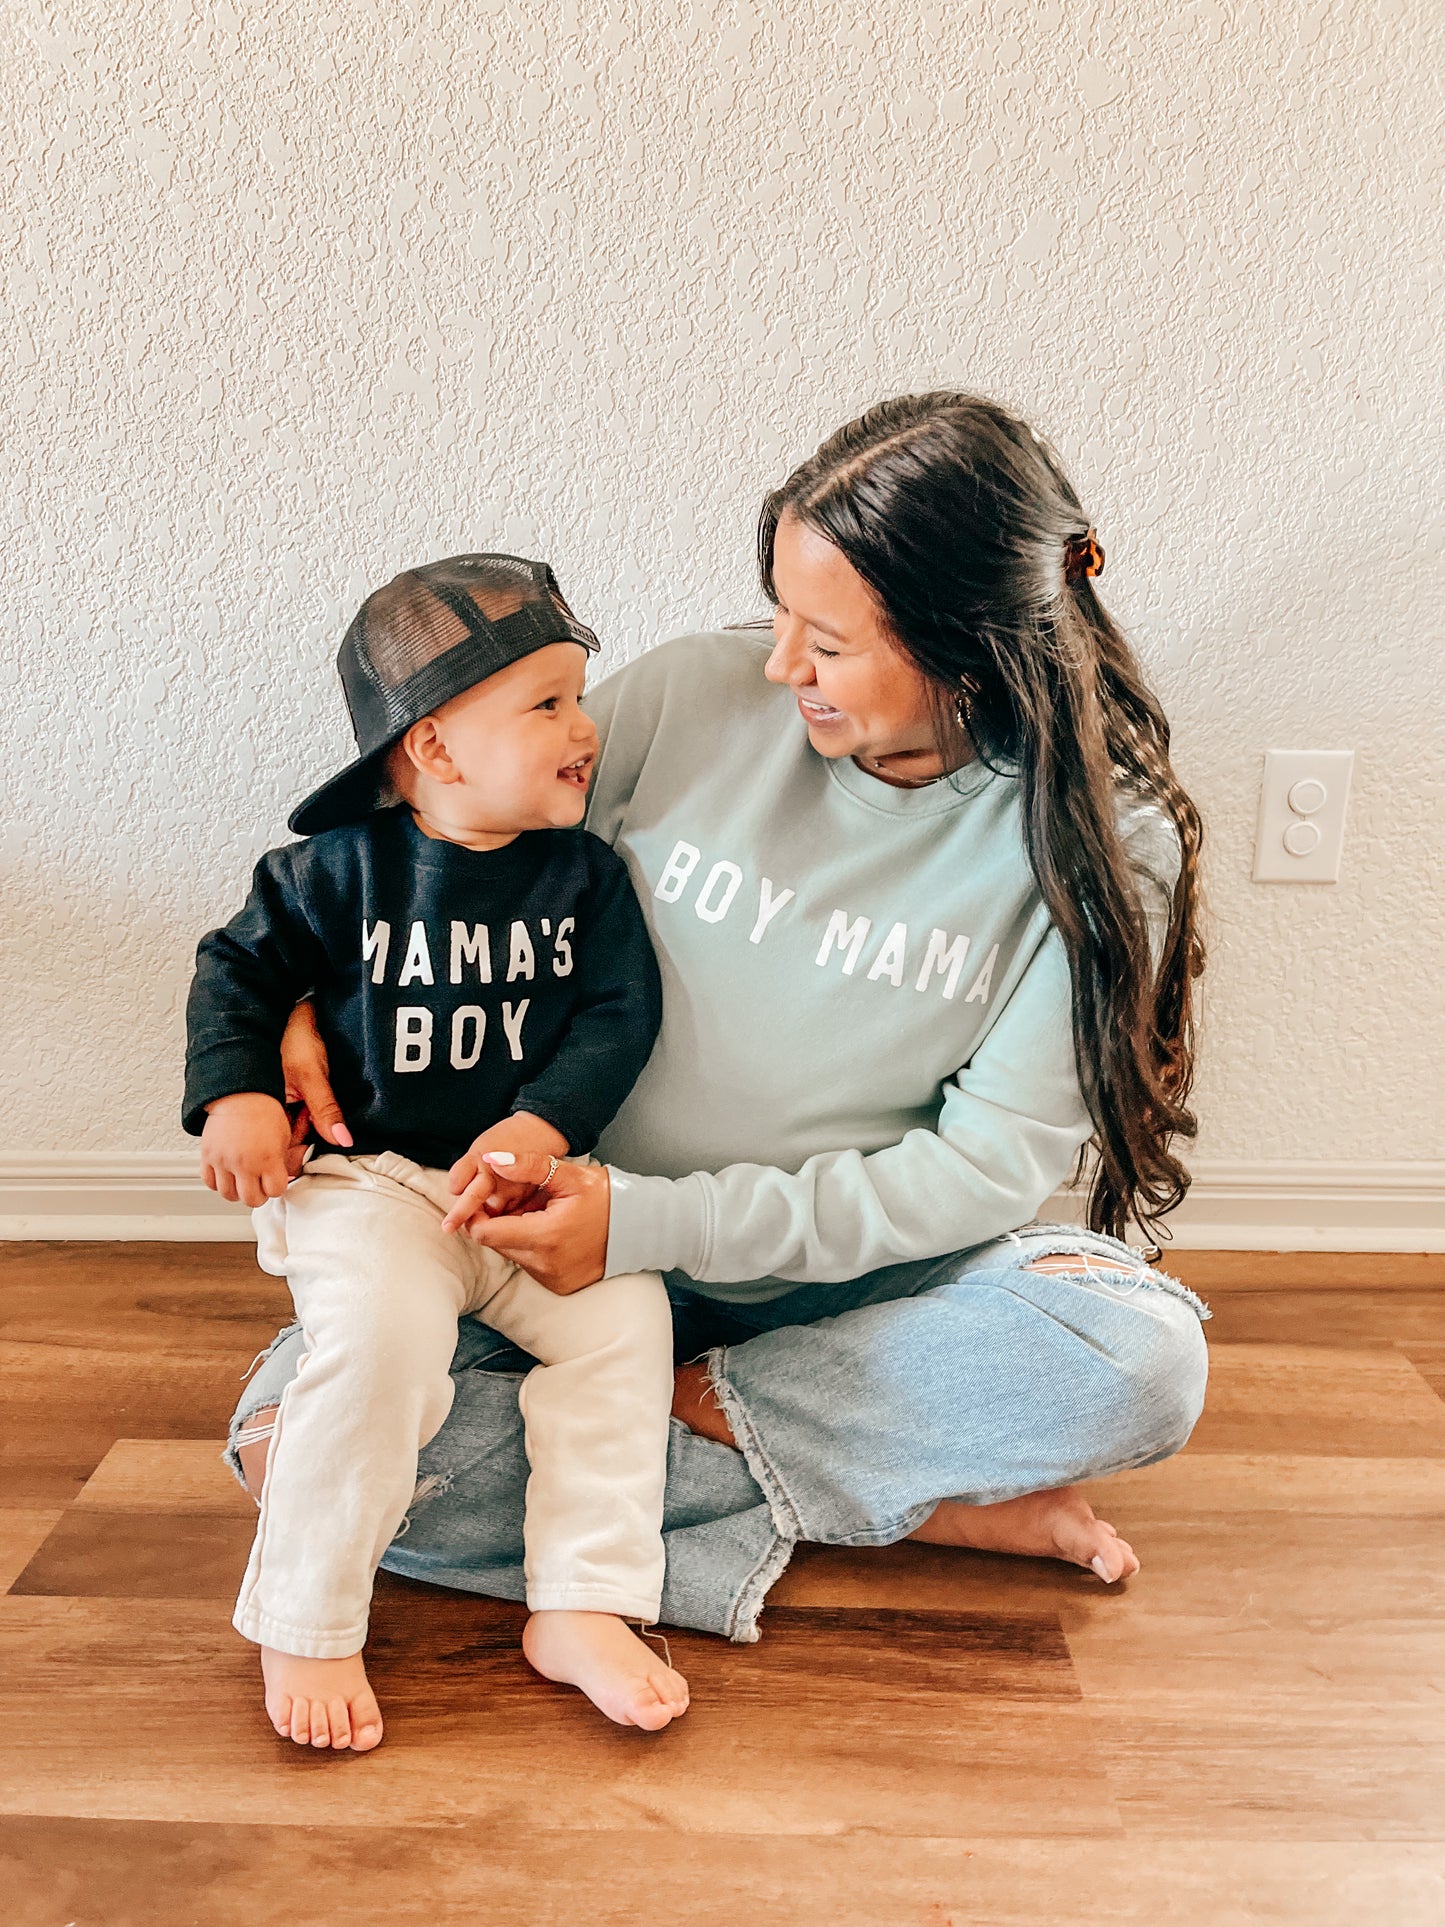 Mama's Boy (White) - Kids Sweatshirt (Black)